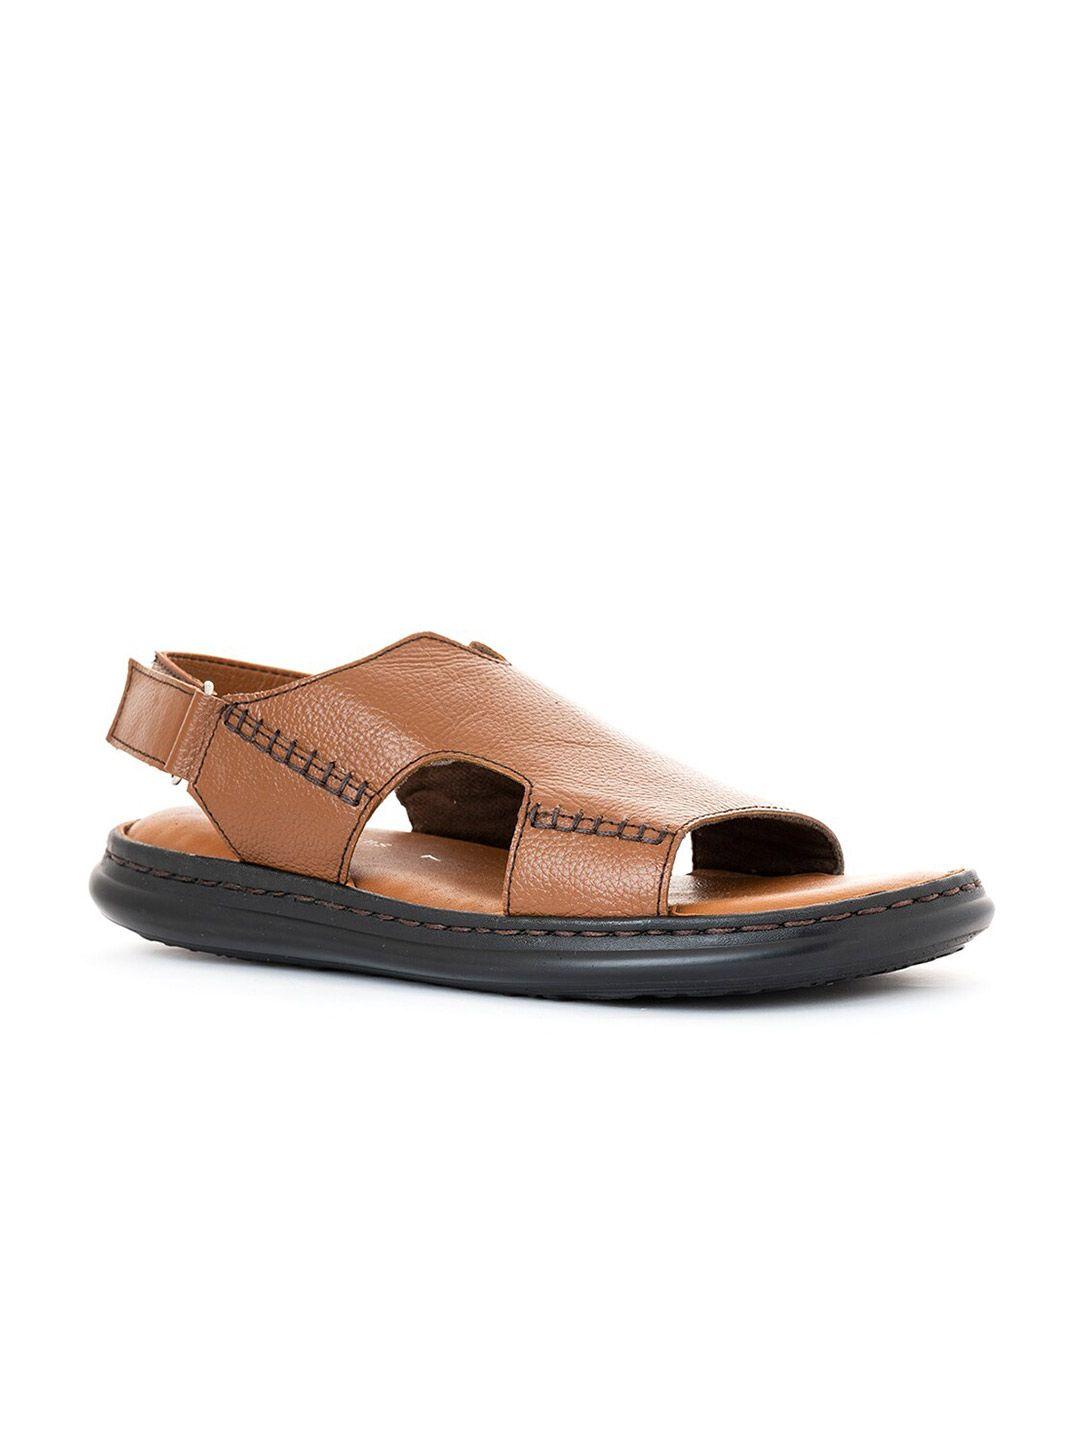 khadims men tan & black comfort sandals